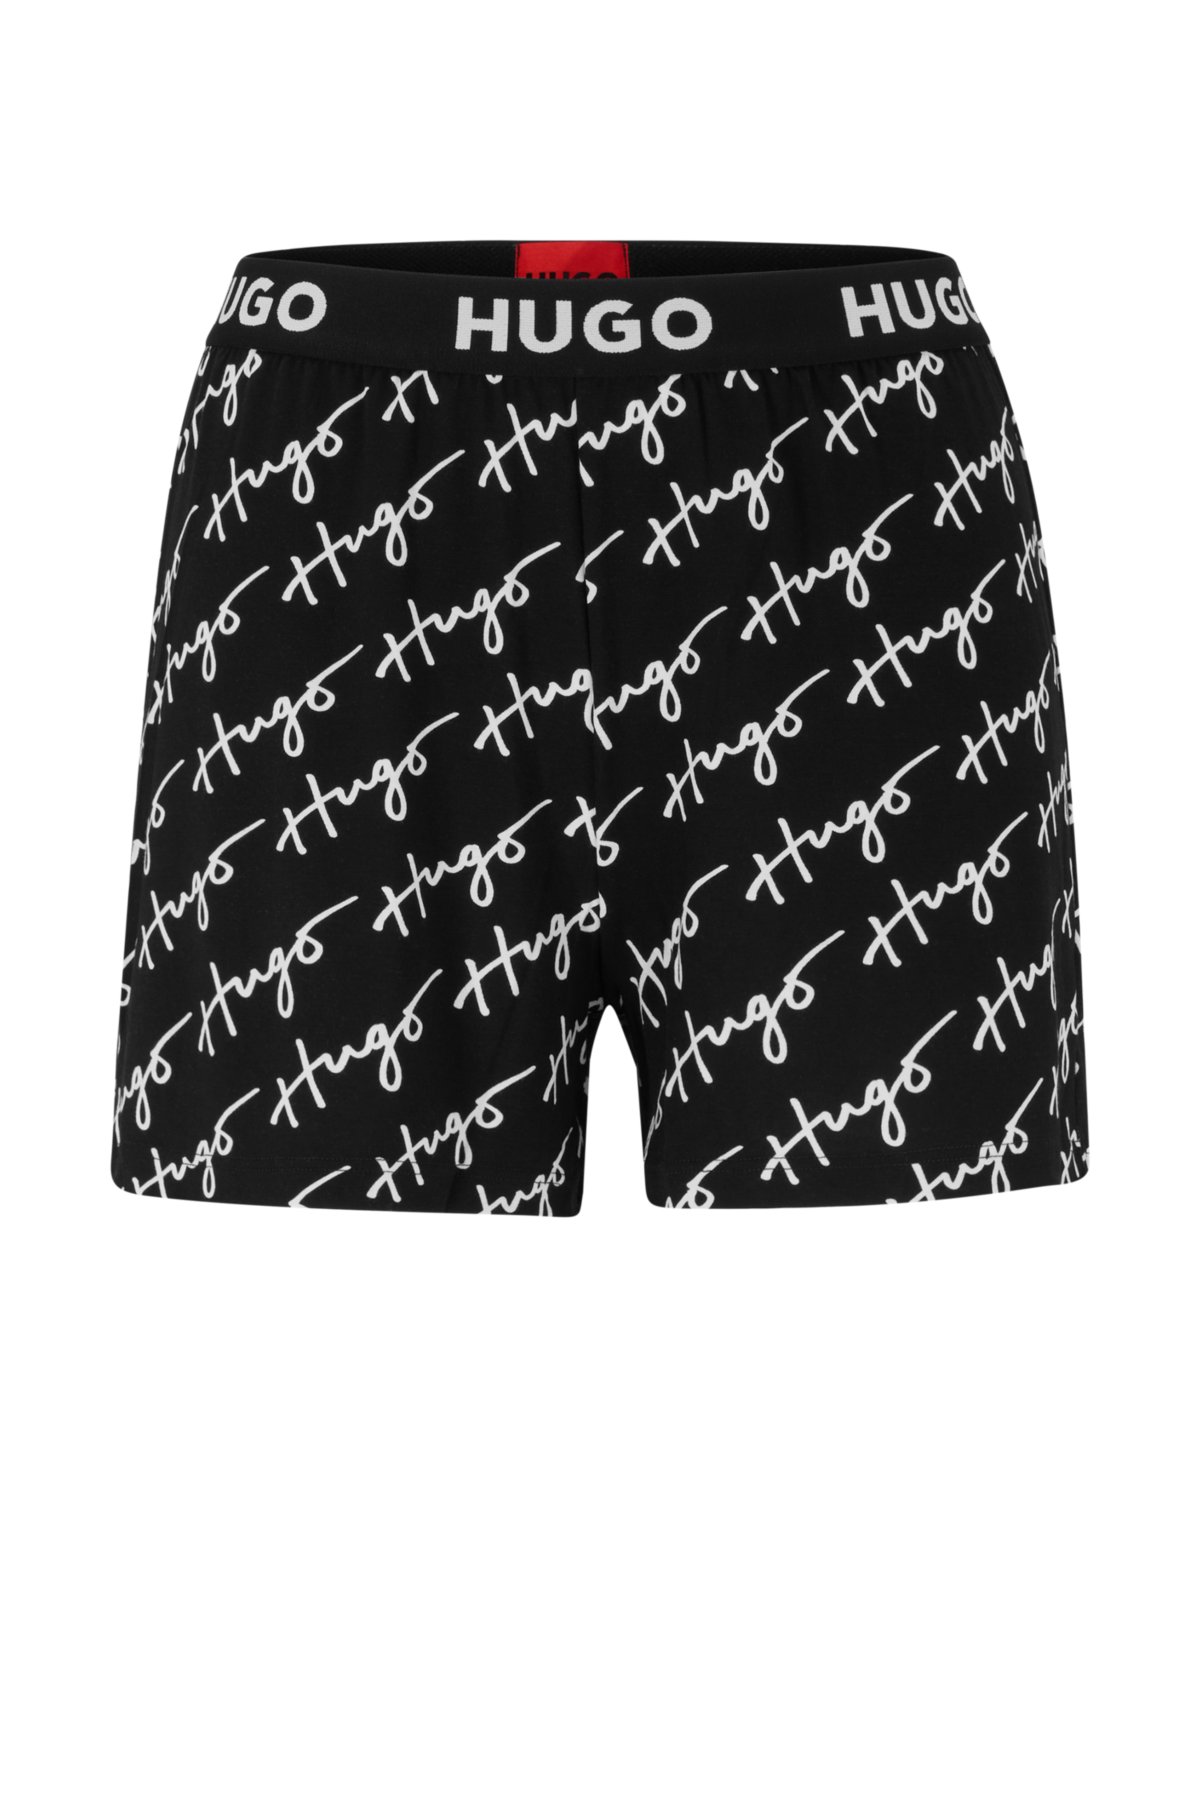 logos original with shorts HUGO handwritten Jersey and - pajama